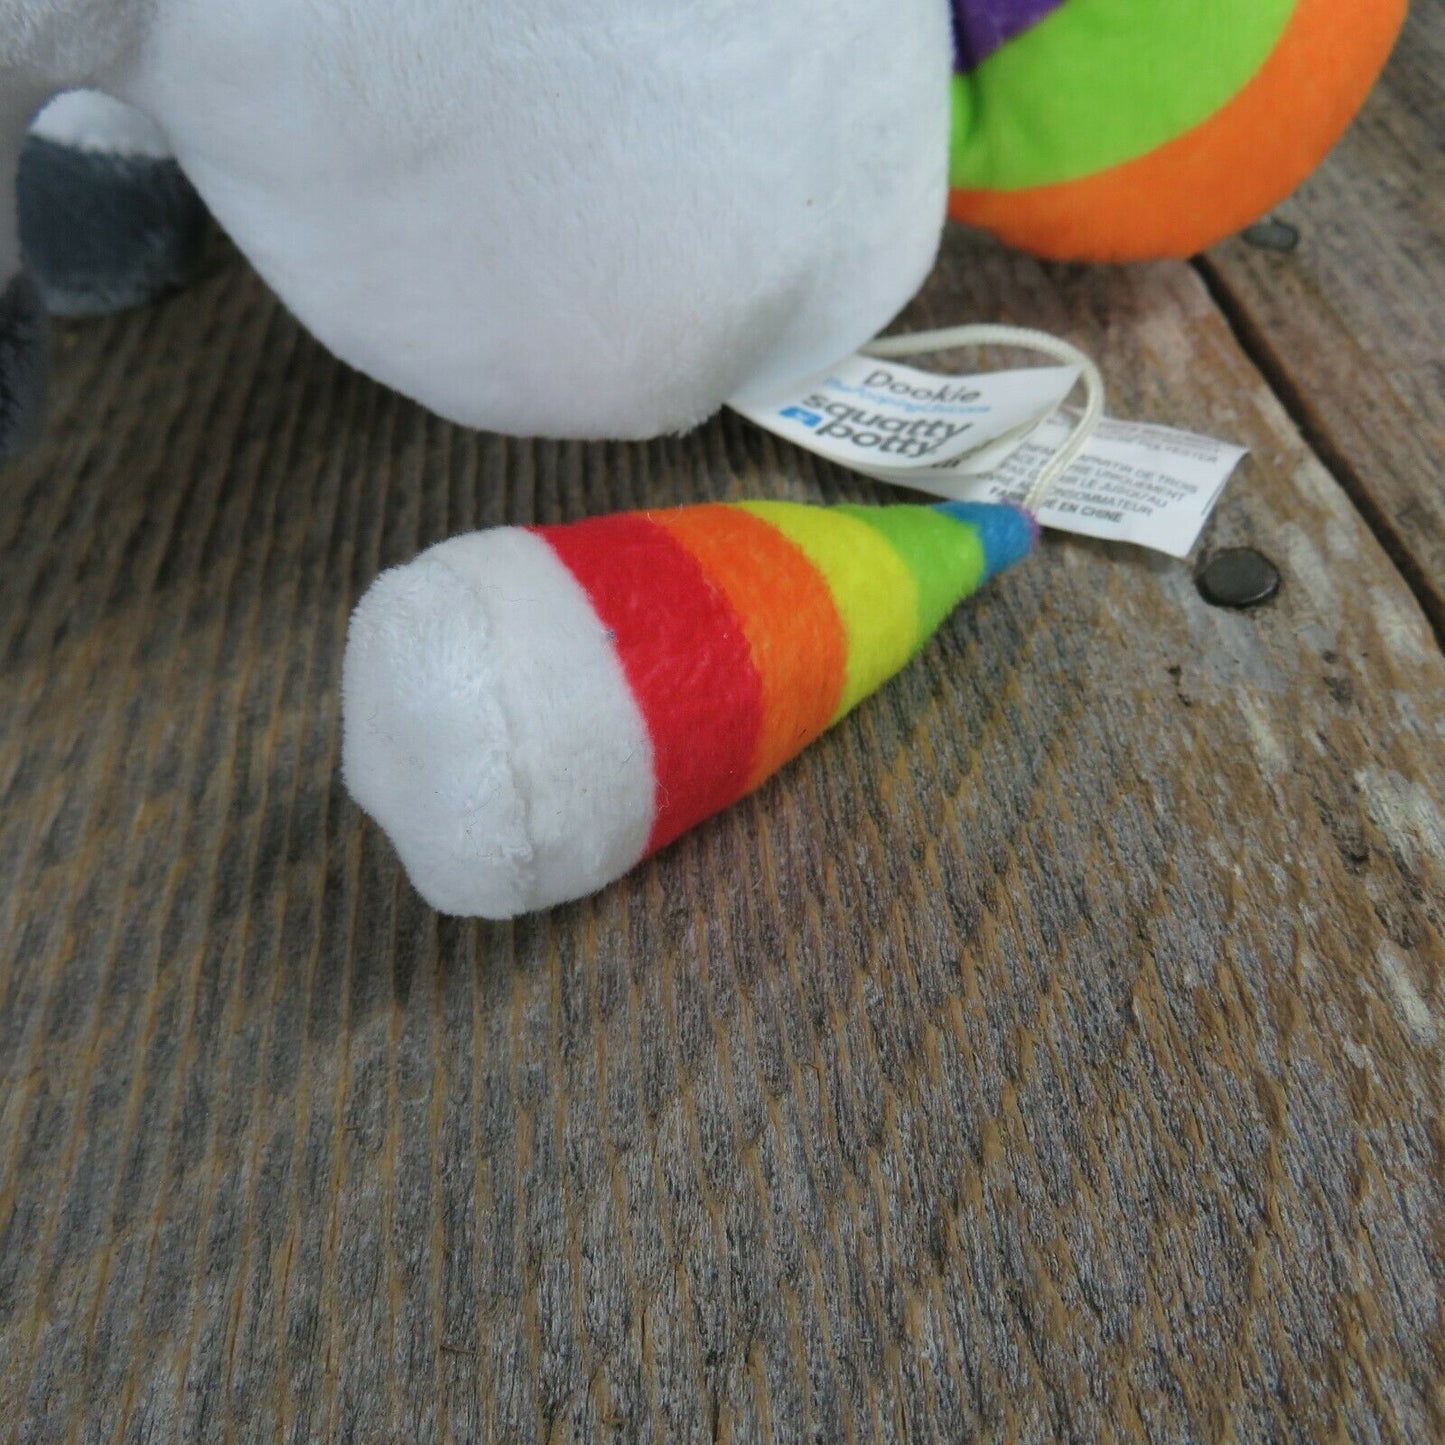 Squatty Potty Dookie Unicorn Plush Pooping Training Rainbow Poop Stuffed Animal